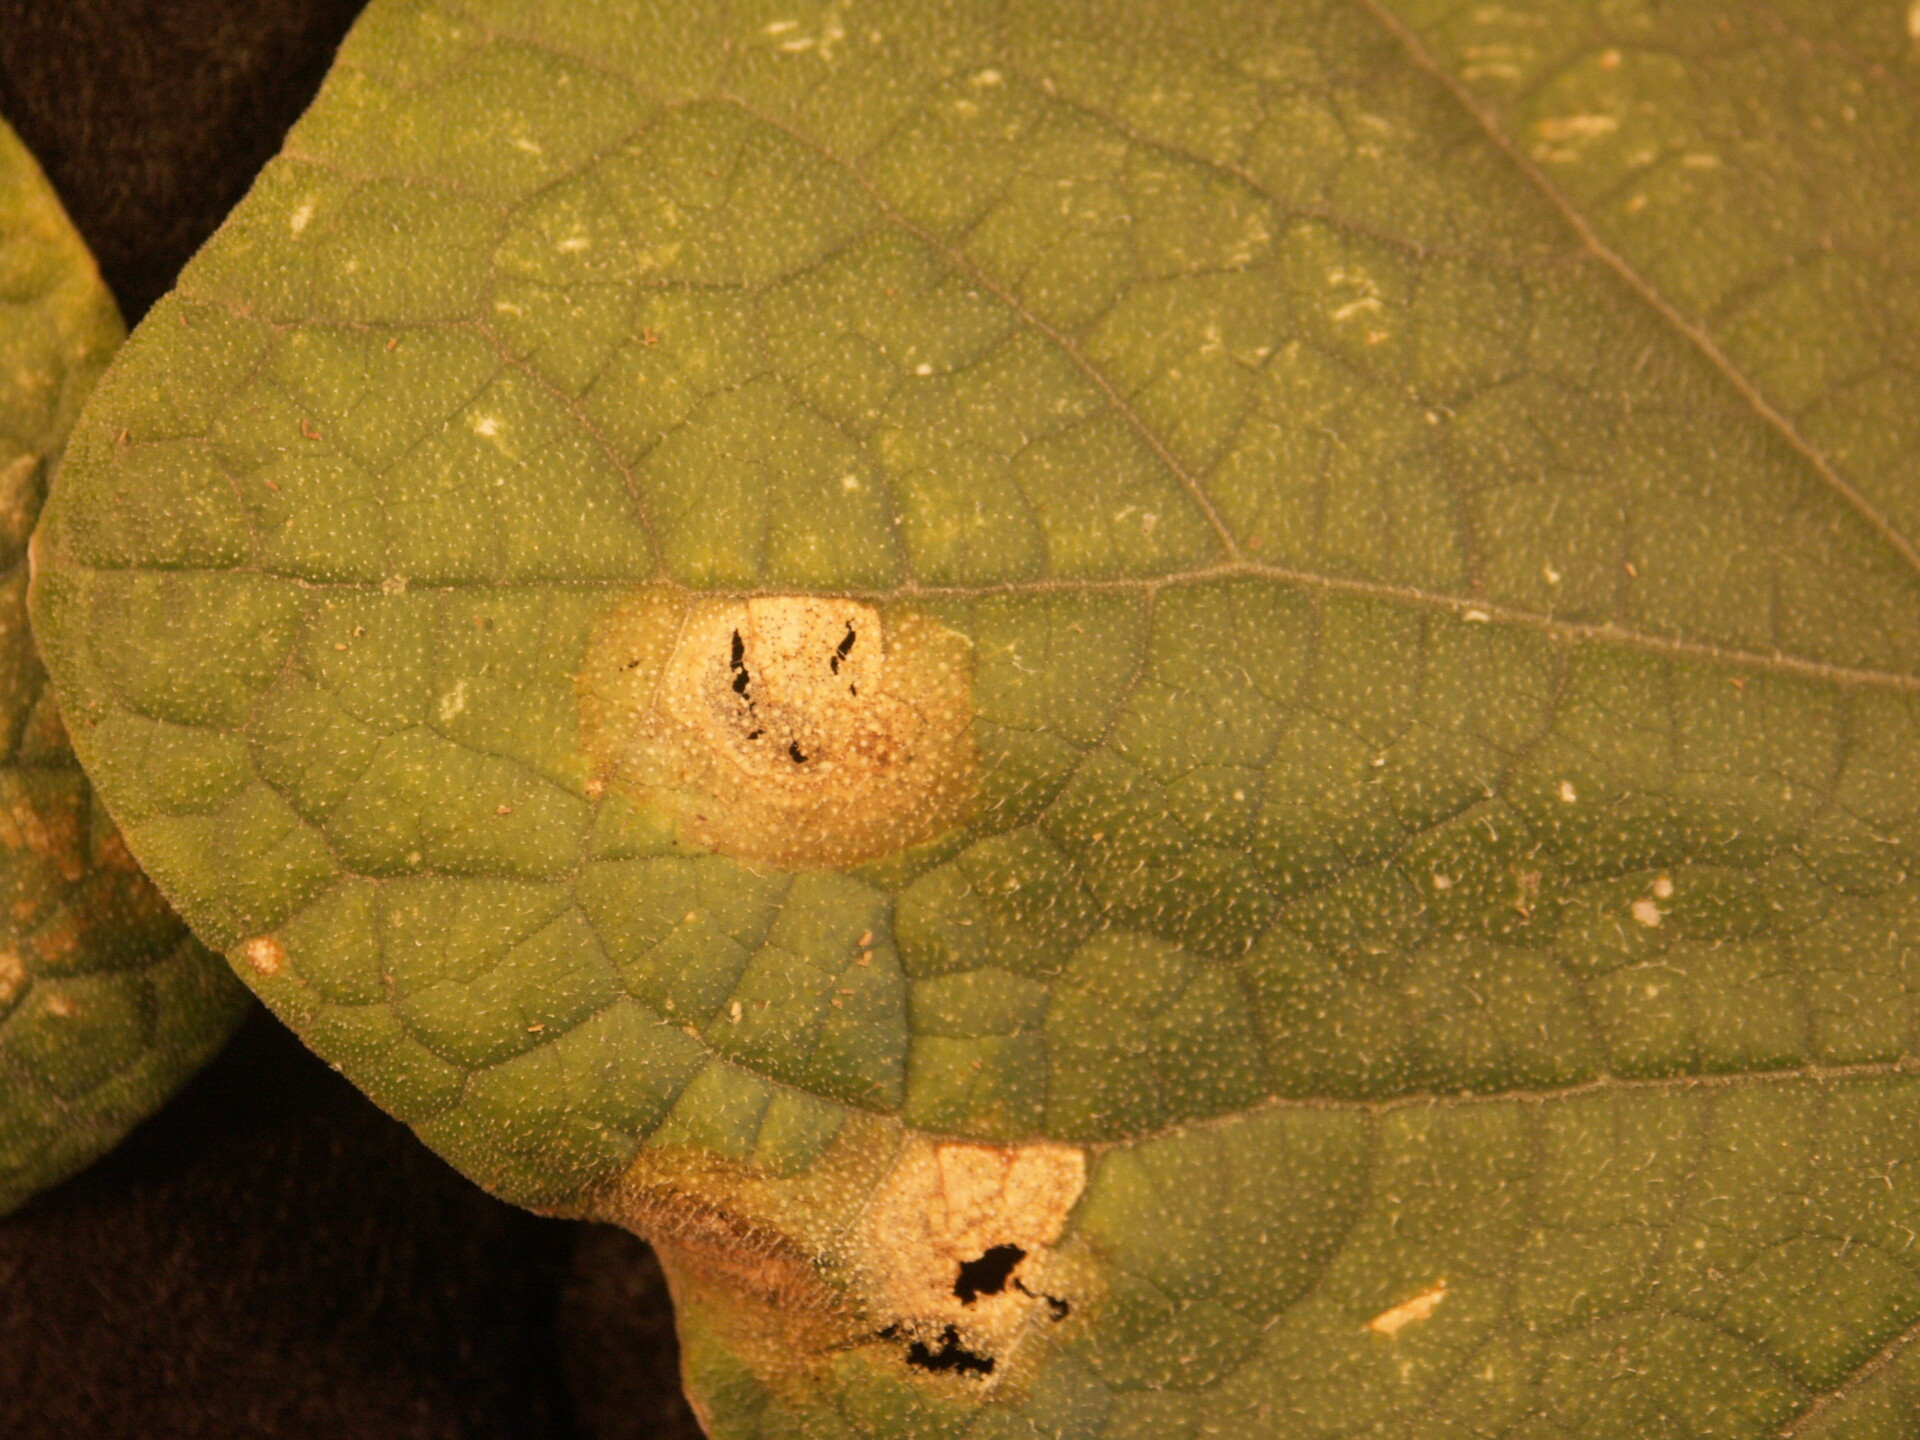 Figure 1. Gummy stem blight lesion on cucumber leaf. 